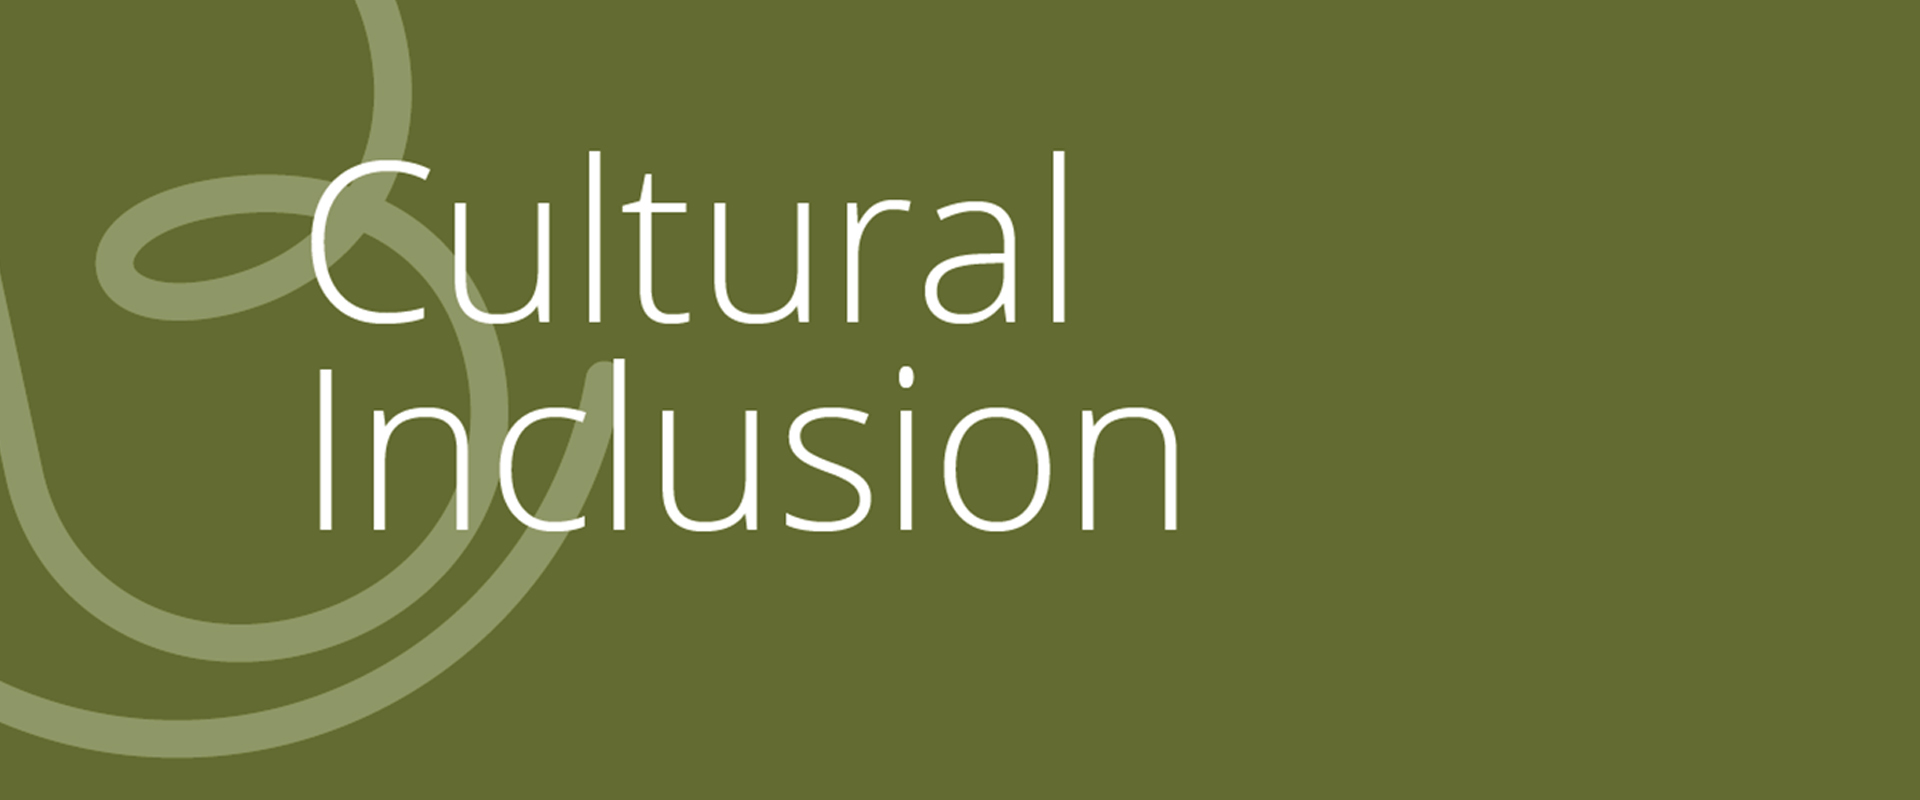 Cultural inclusion